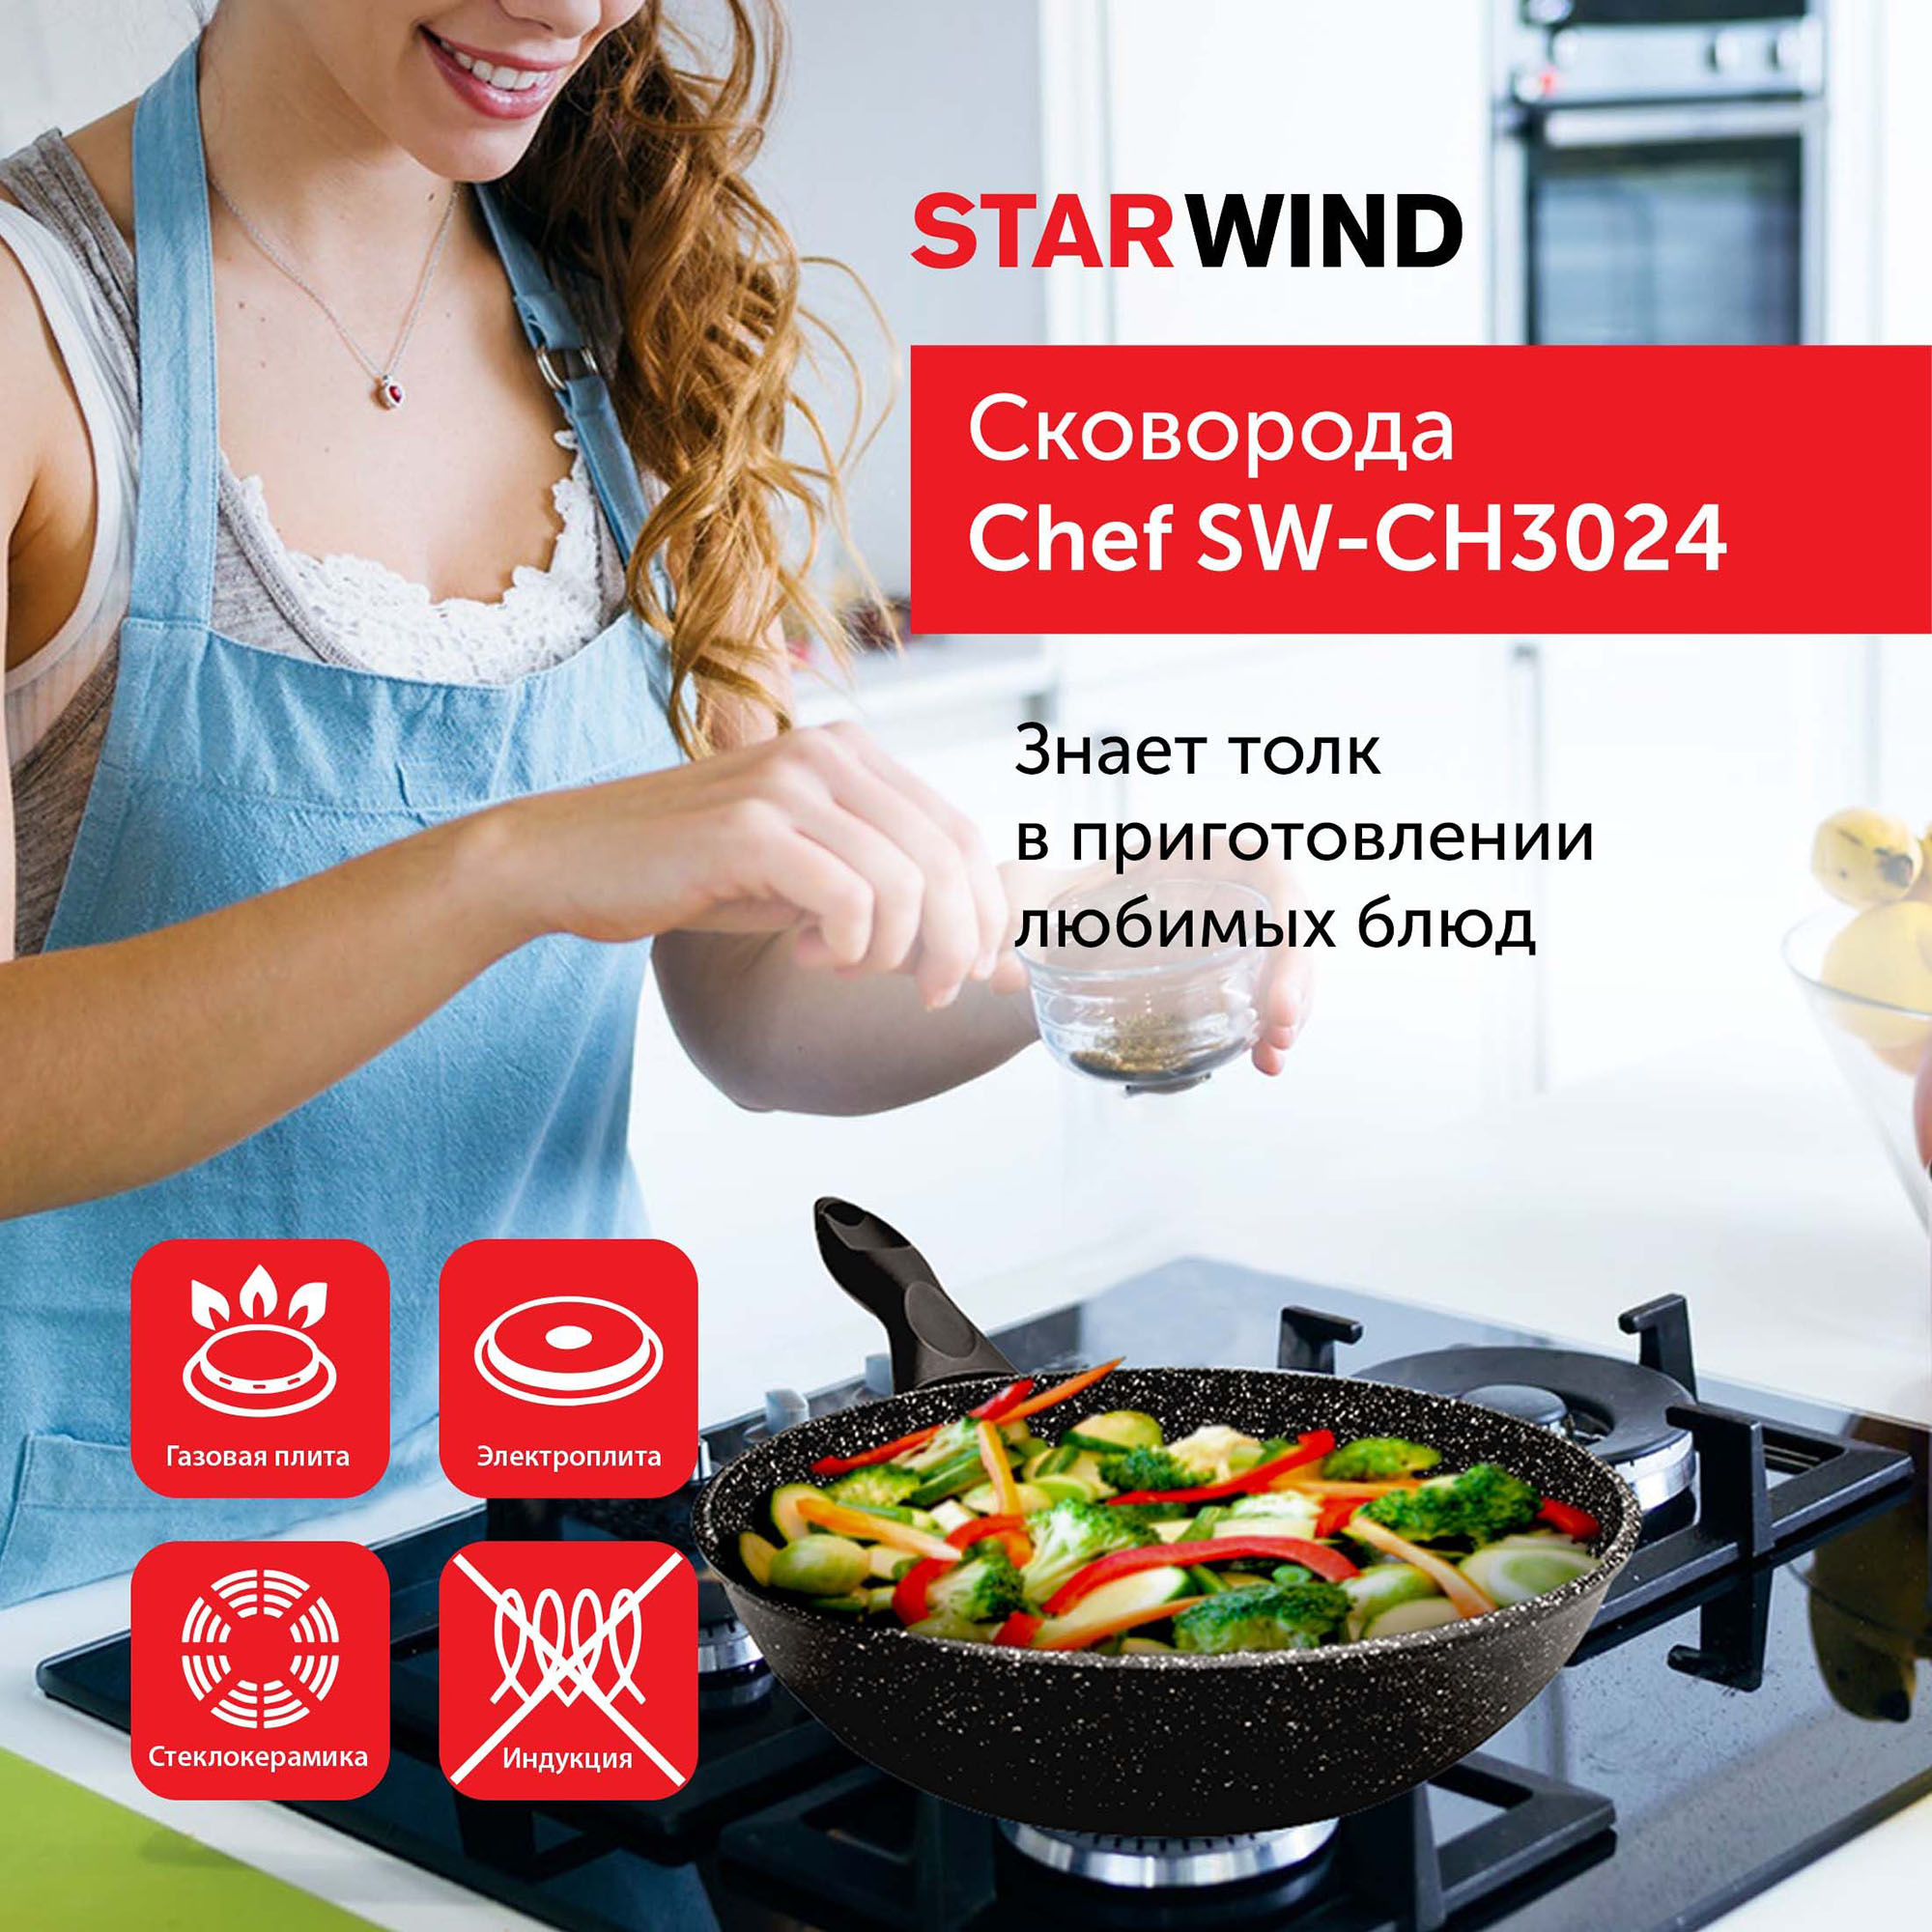 Сковорода Starwind Chef SW-CH3024, 24см, черный, Quantum2 покрытие, без крышки (sw-ch3024/кор) от магазина Старвинд